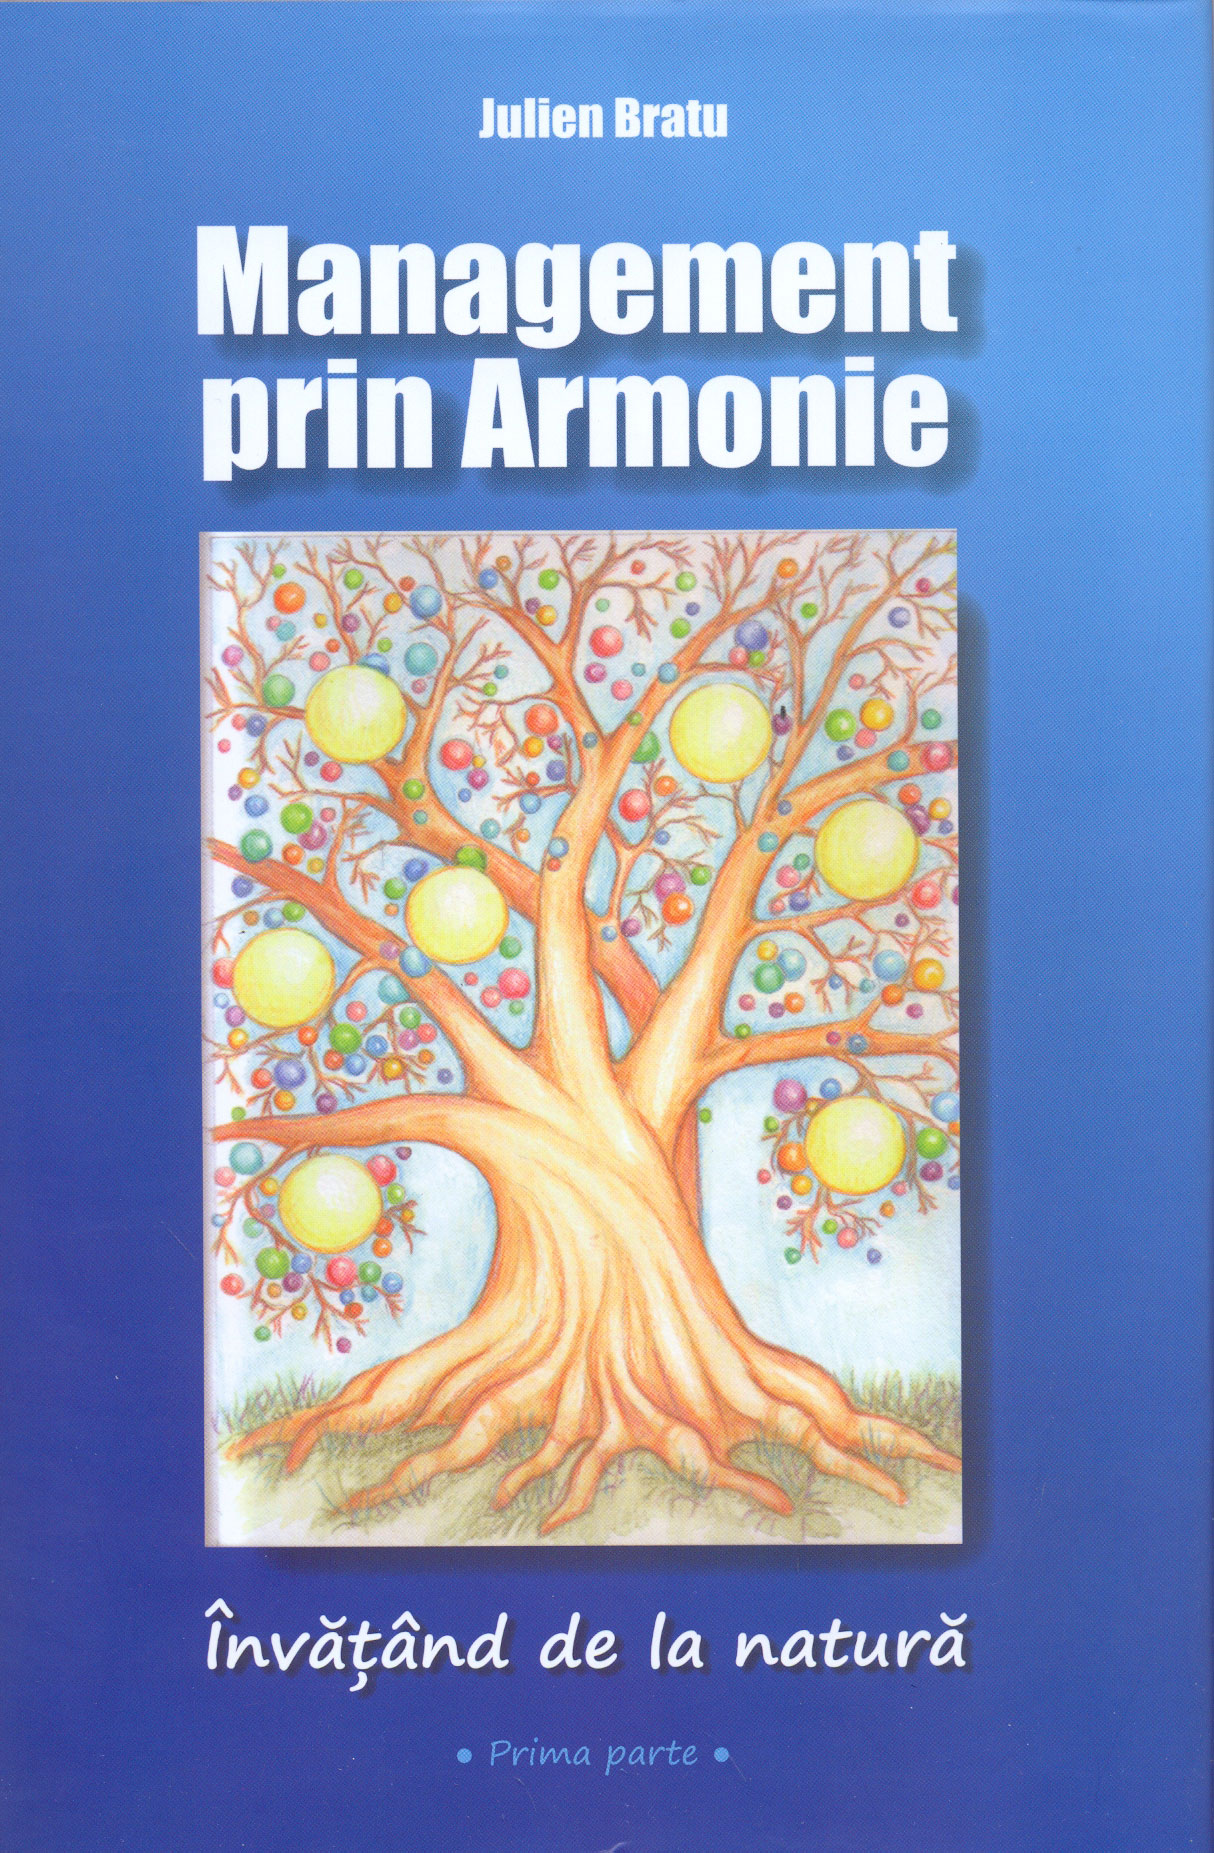 Management prin armonie | Julien Bratu Bracoforum poza bestsellers.ro